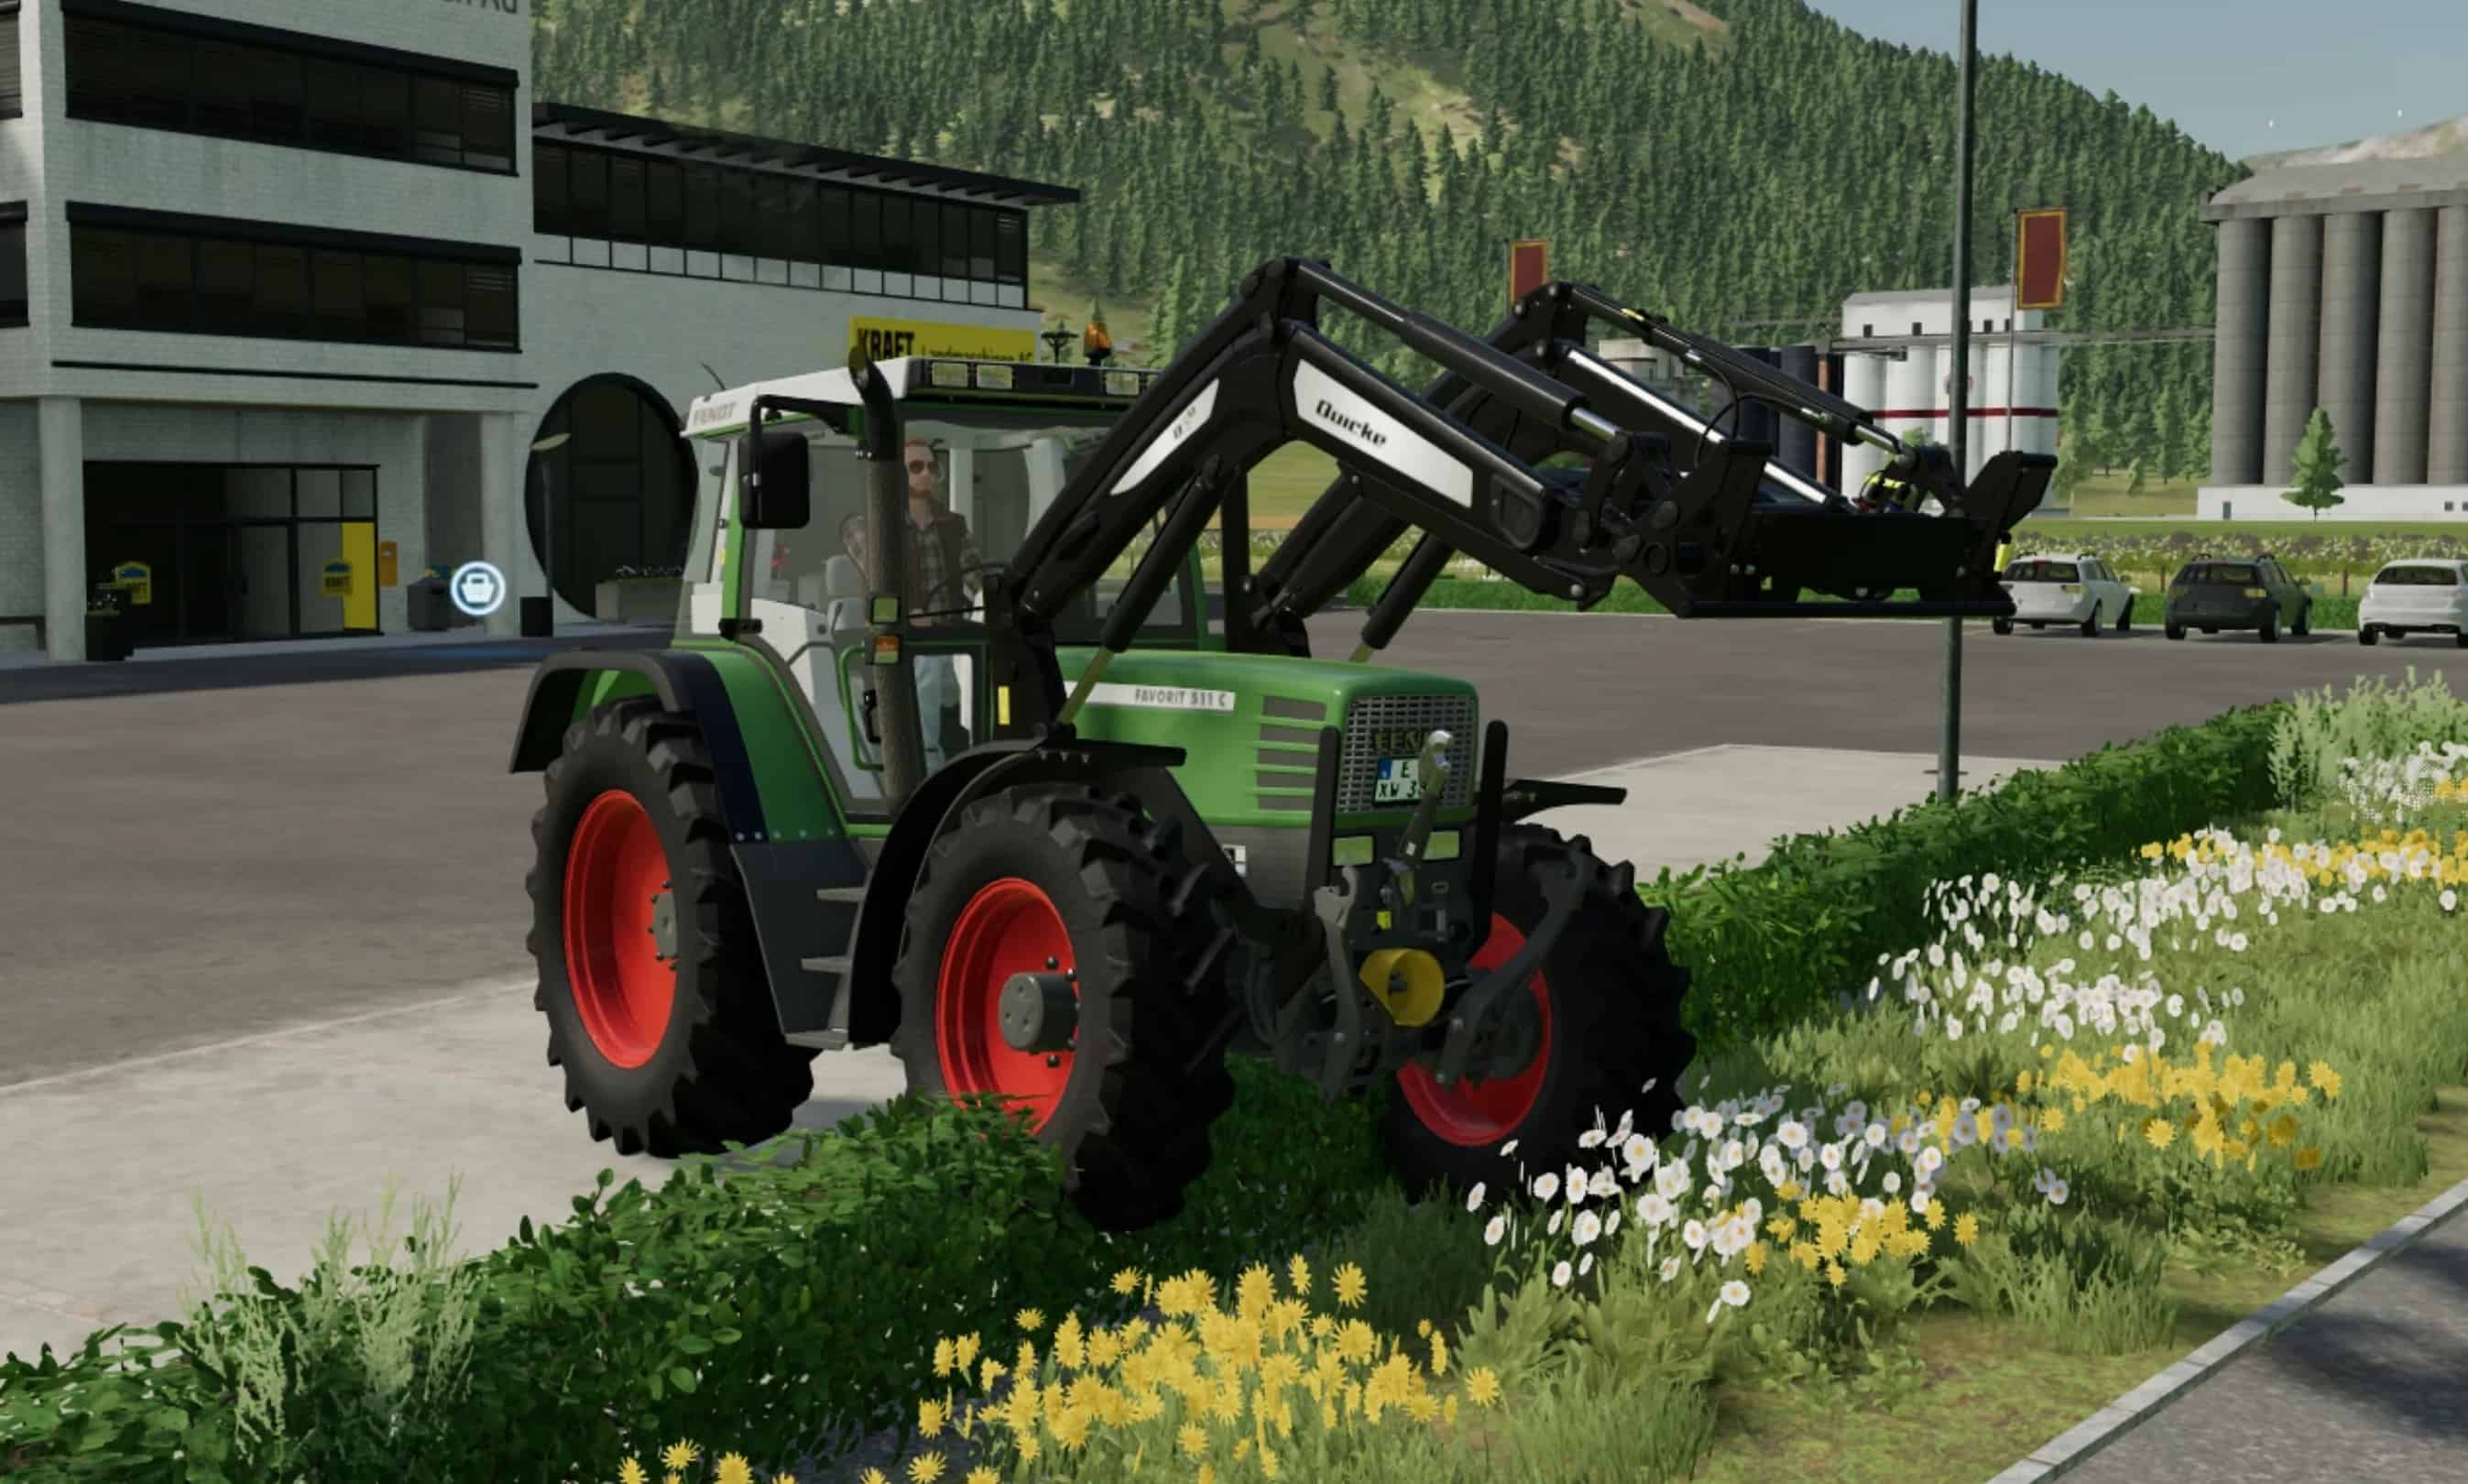 FS22: FSG Mod Assistant v 1.0.0.0 Tools Mod für Farming Simulator 22